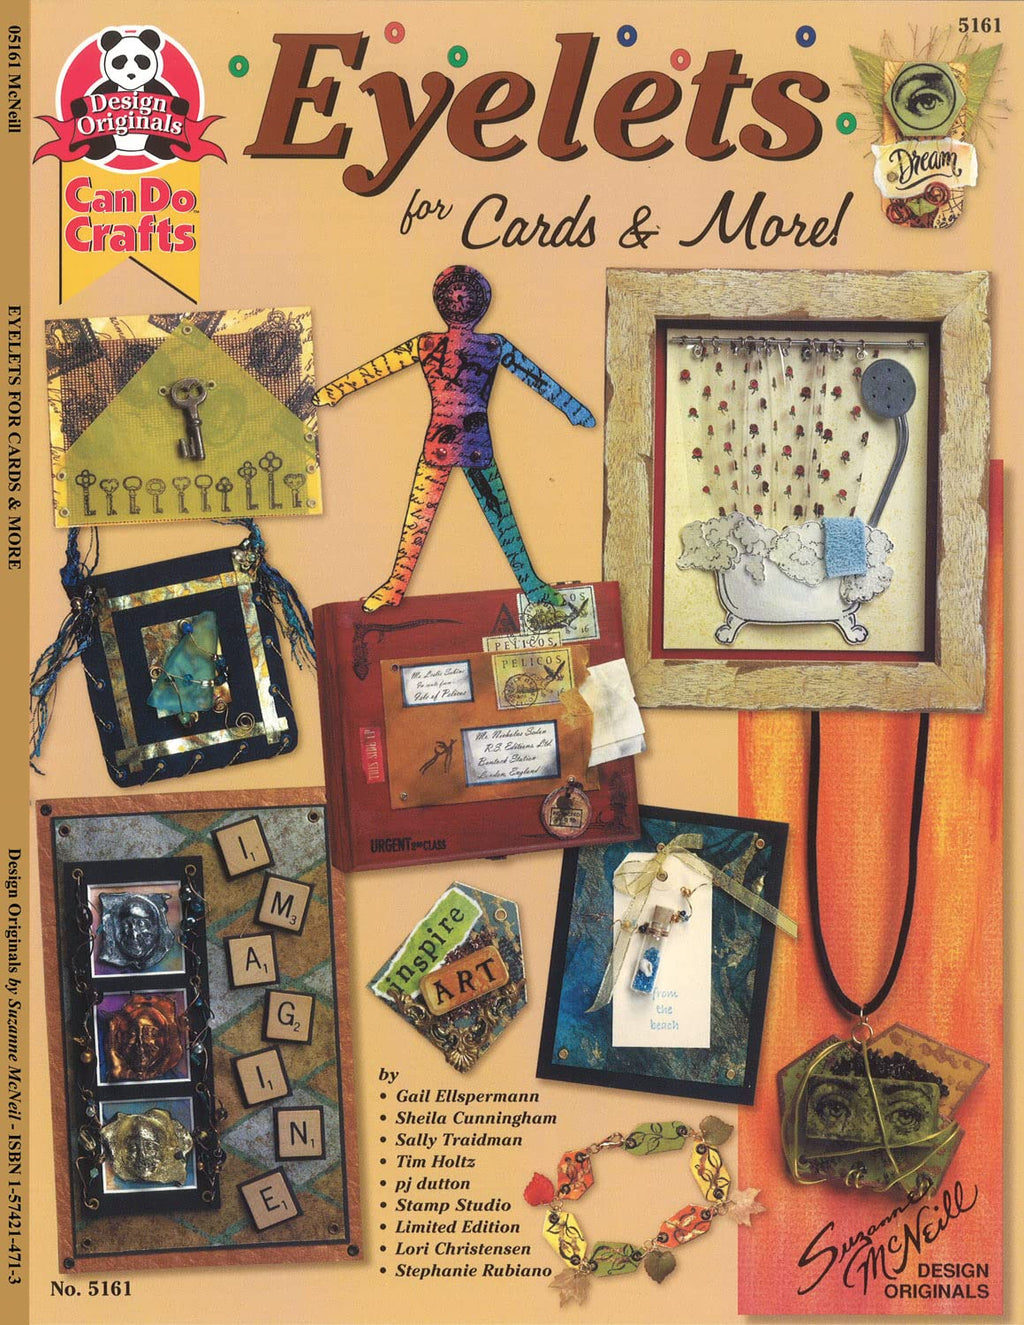 Eyelets for Cards & More book. A Design Original publication. ISBN 157421471-3